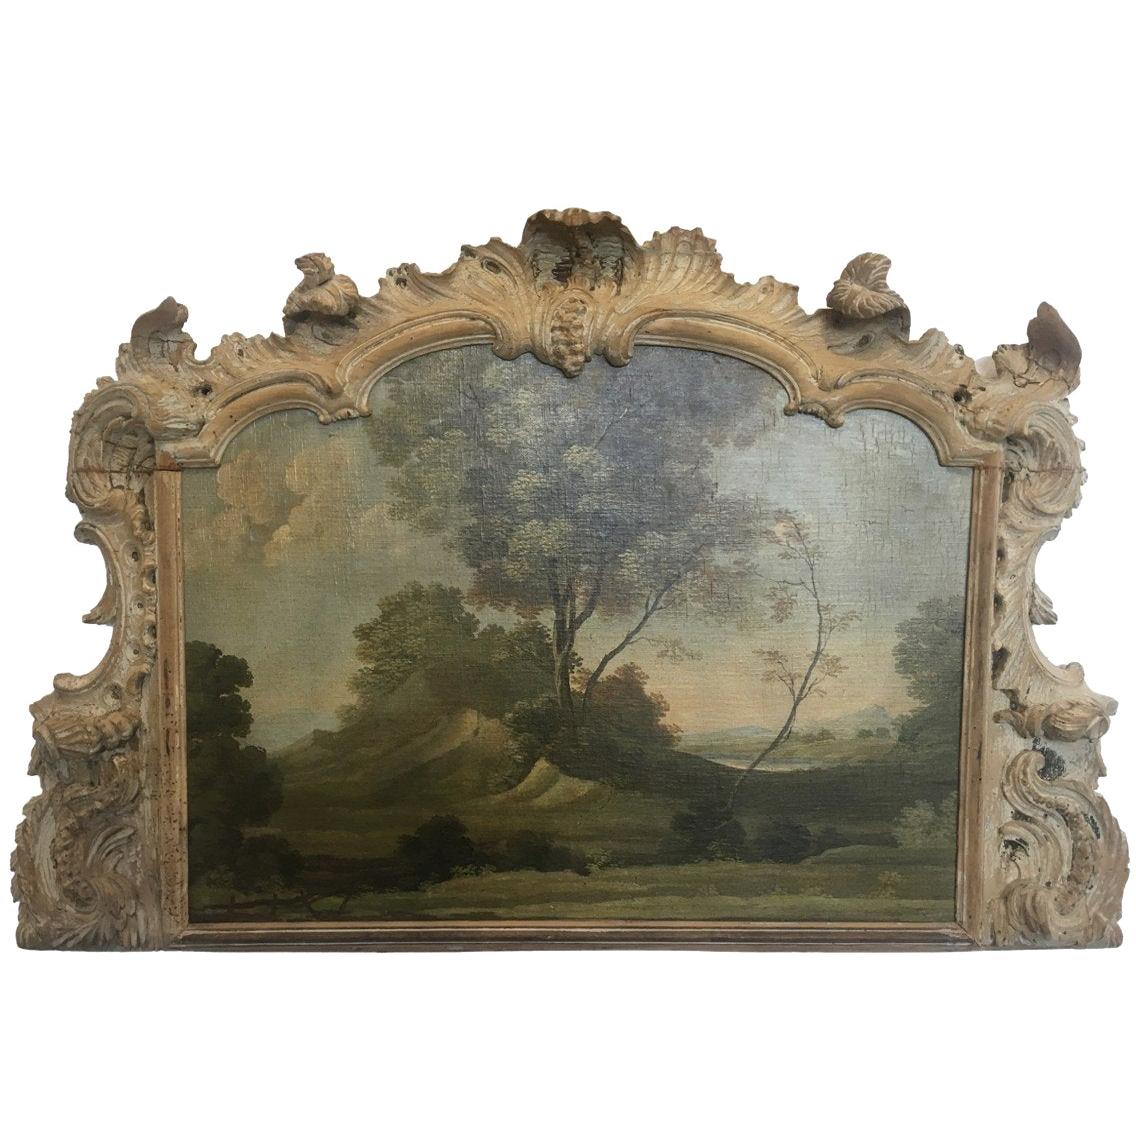 Early Landscape in Carved Boiserie Frame